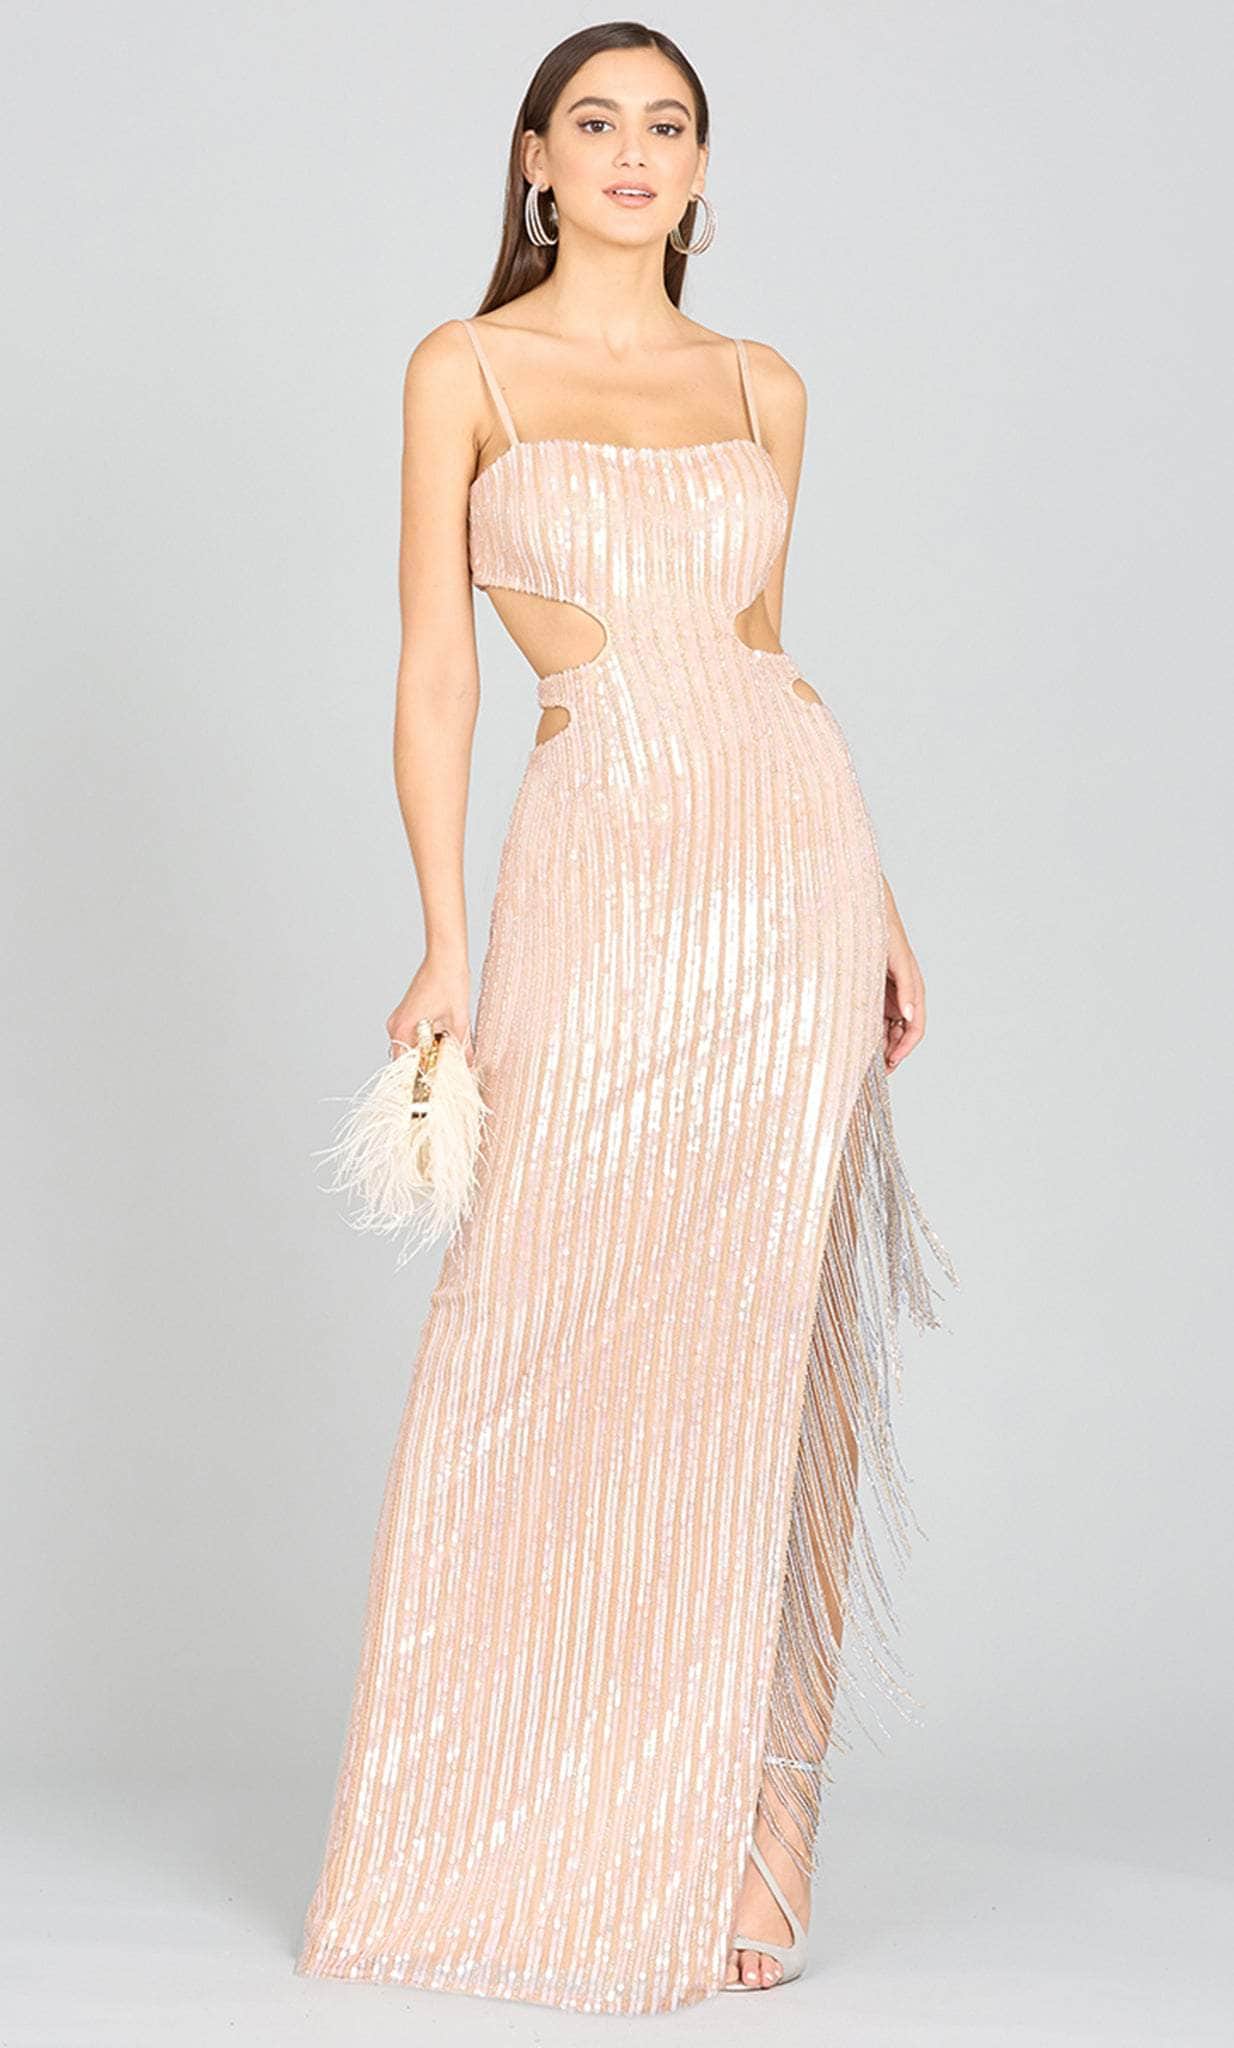 Image of Lara Dresses 9975 - Spaghetti Strap Sequin Prom Dress